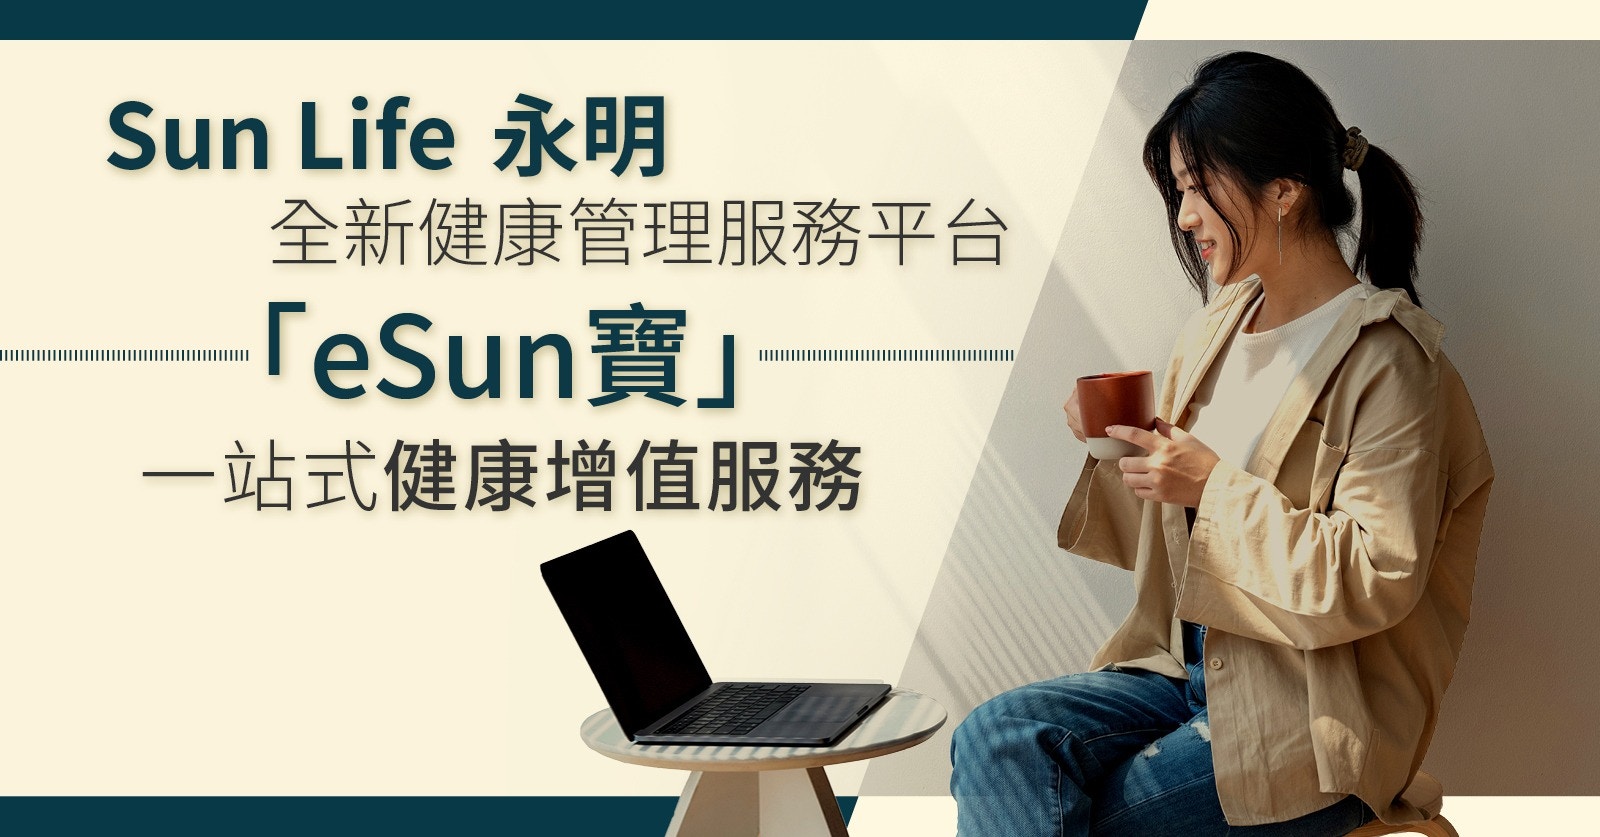 Sun Life永明全新健康管理服務平台「eSun寶」一站式健康增值服務